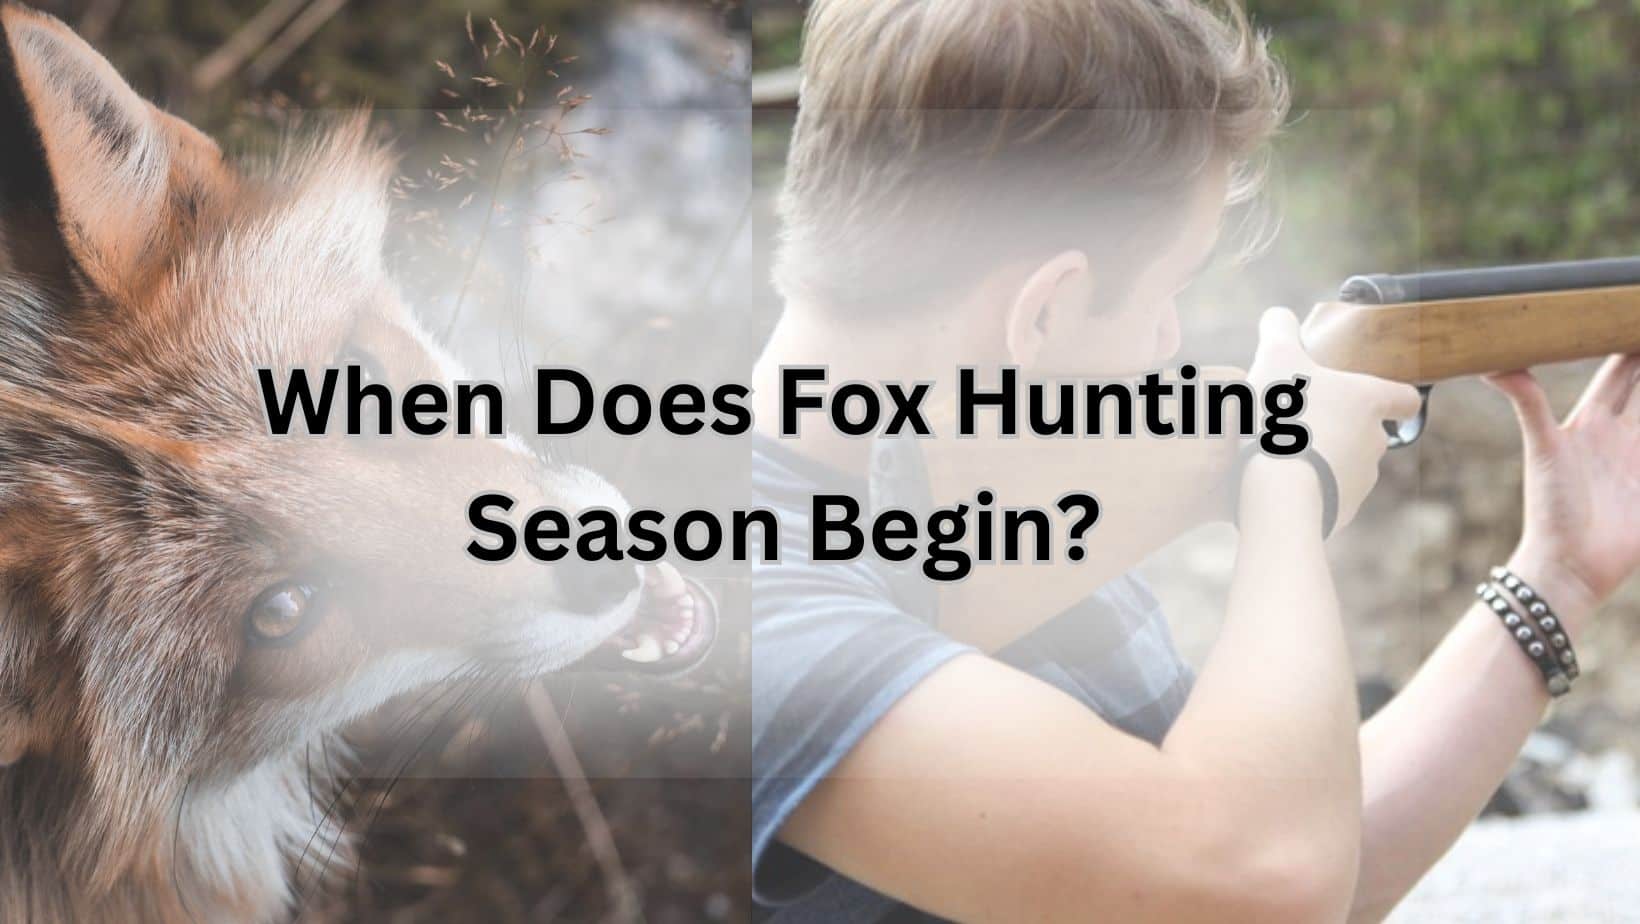 When Does Fox Hunting Season Begin?